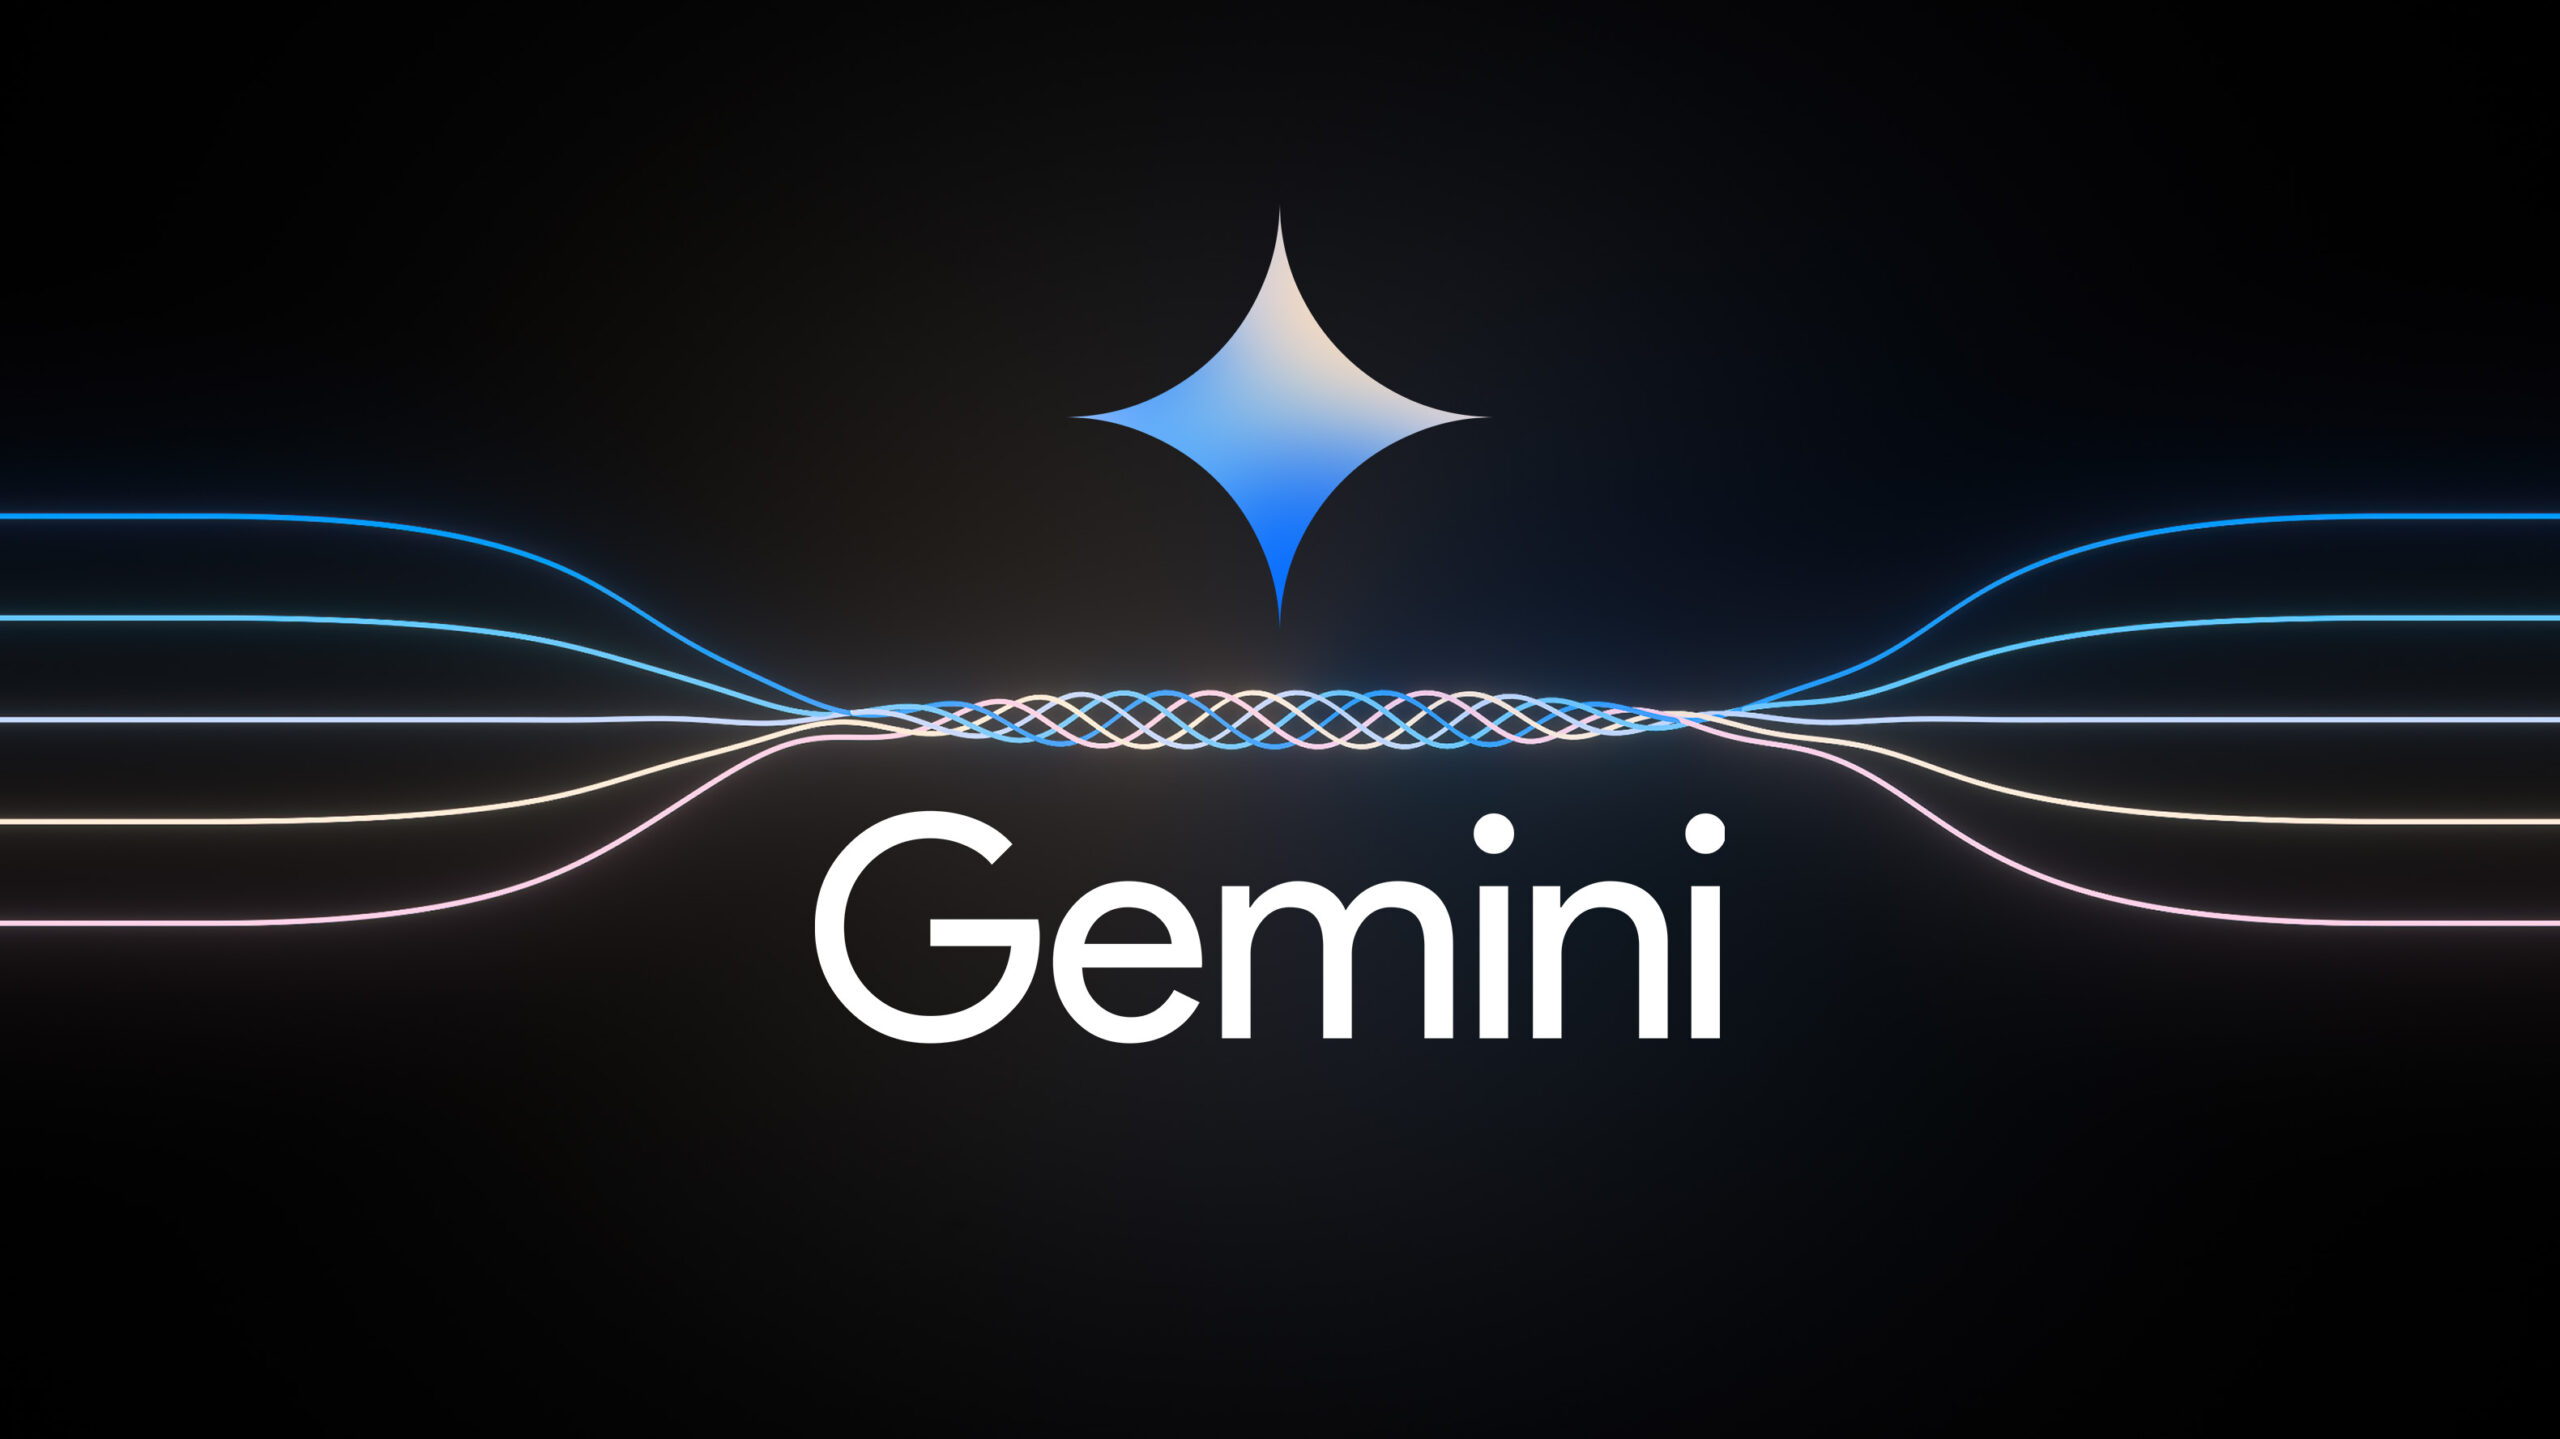 Google เปิดตัว AI ใหม่ “Gemini” ฉลาดกว่า GPT-4 แทบทุกด้าน